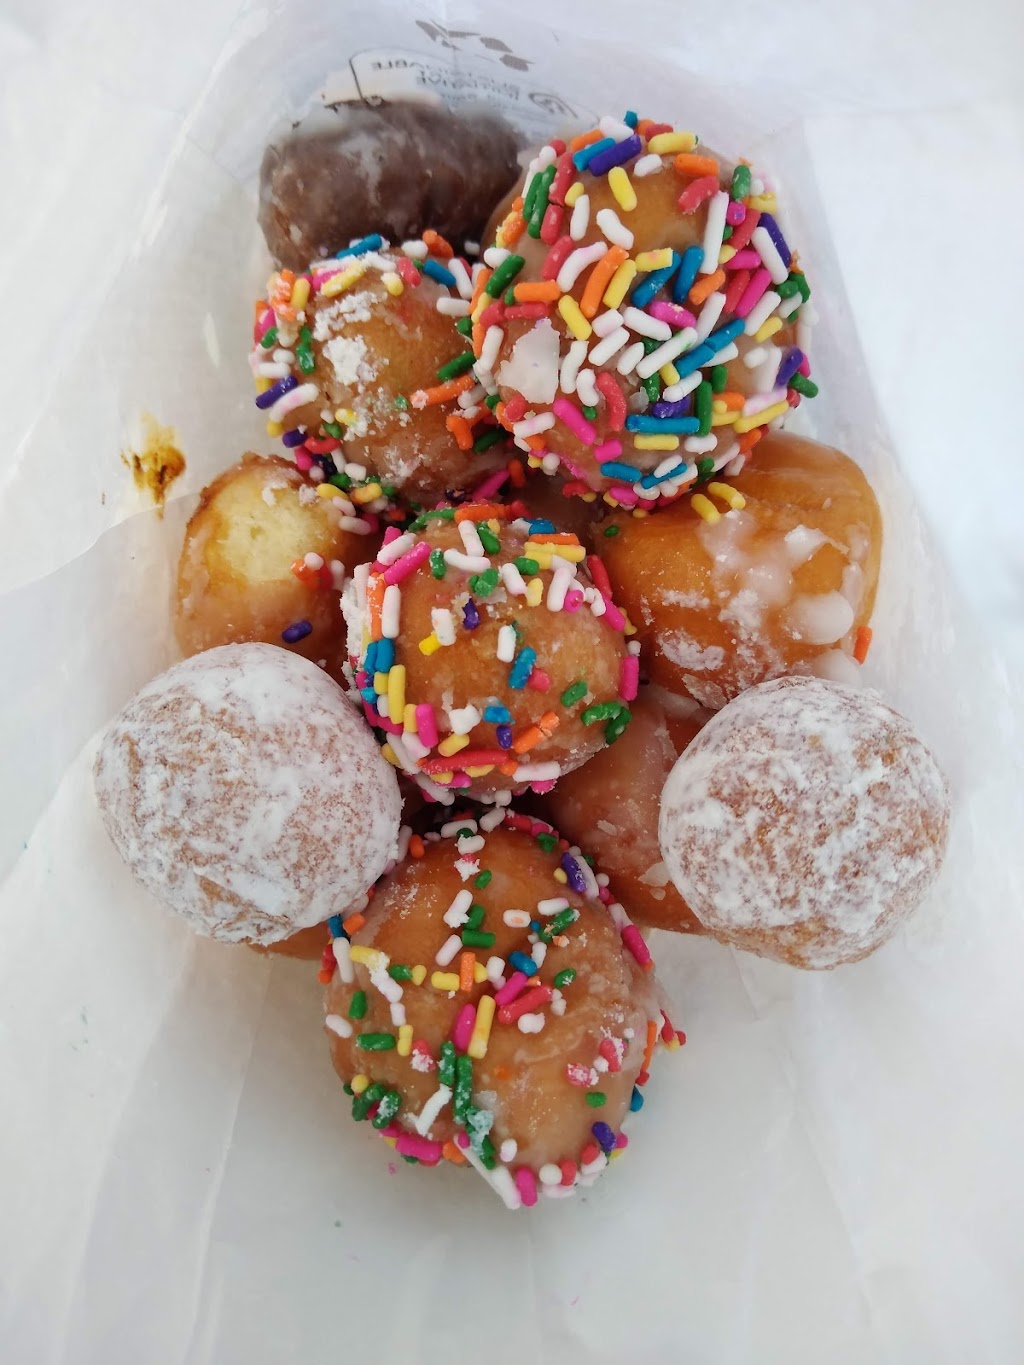 Sunny Donuts | 4199 Spring St, La Mesa, CA 91941, USA | Phone: (619) 464-7566